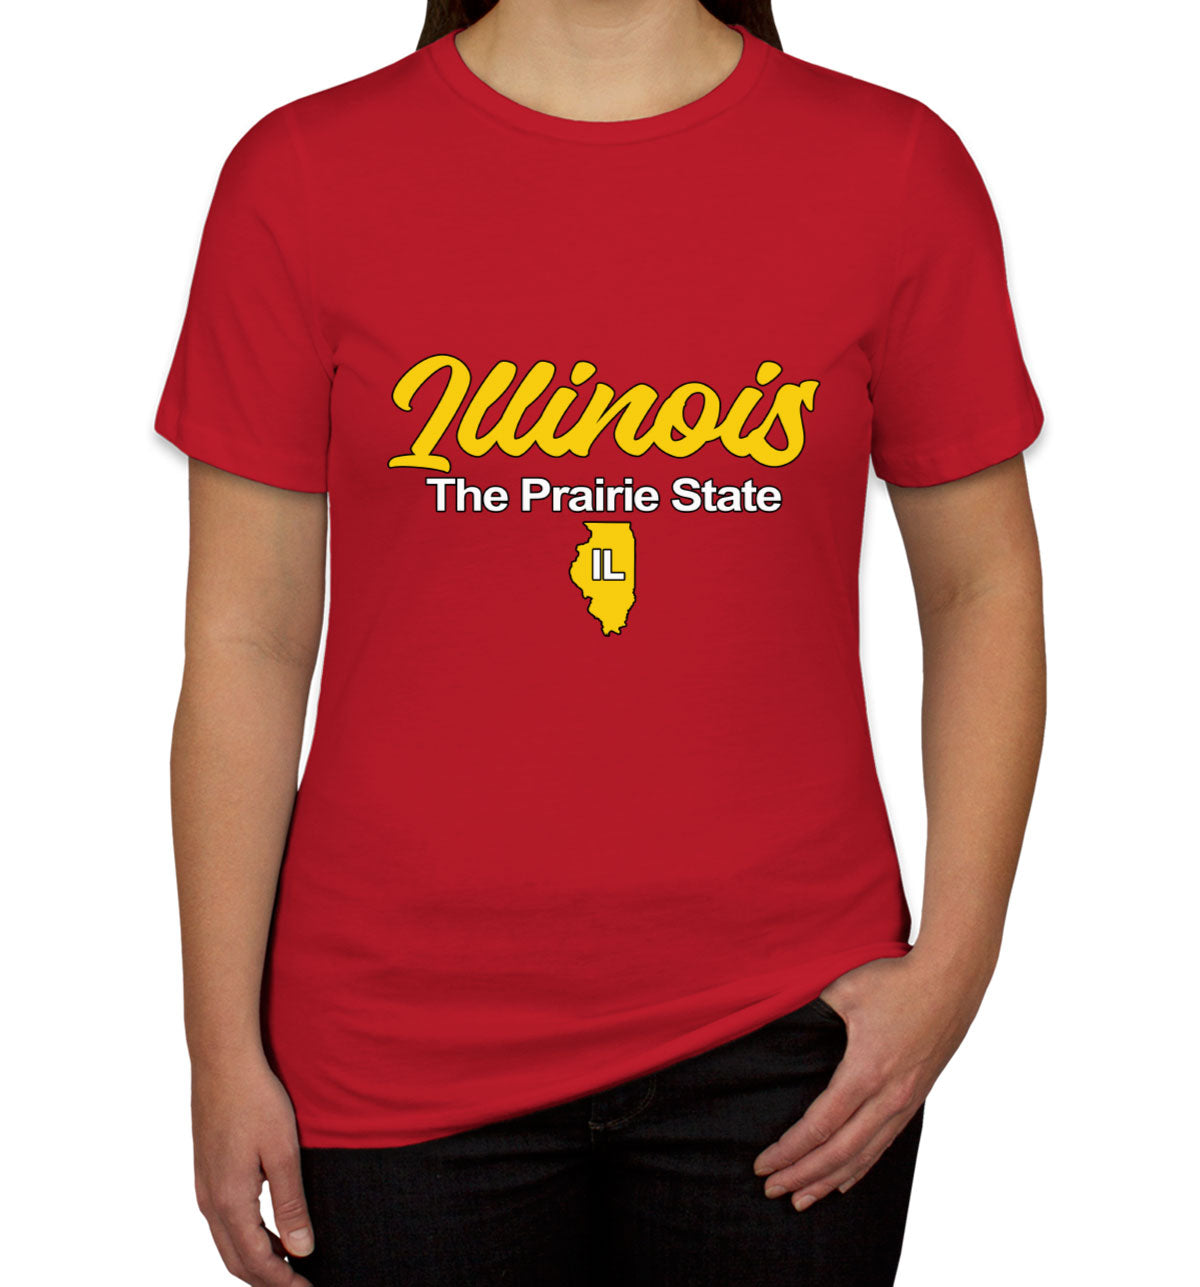 Illinois The Prairie State Women's T-shirt